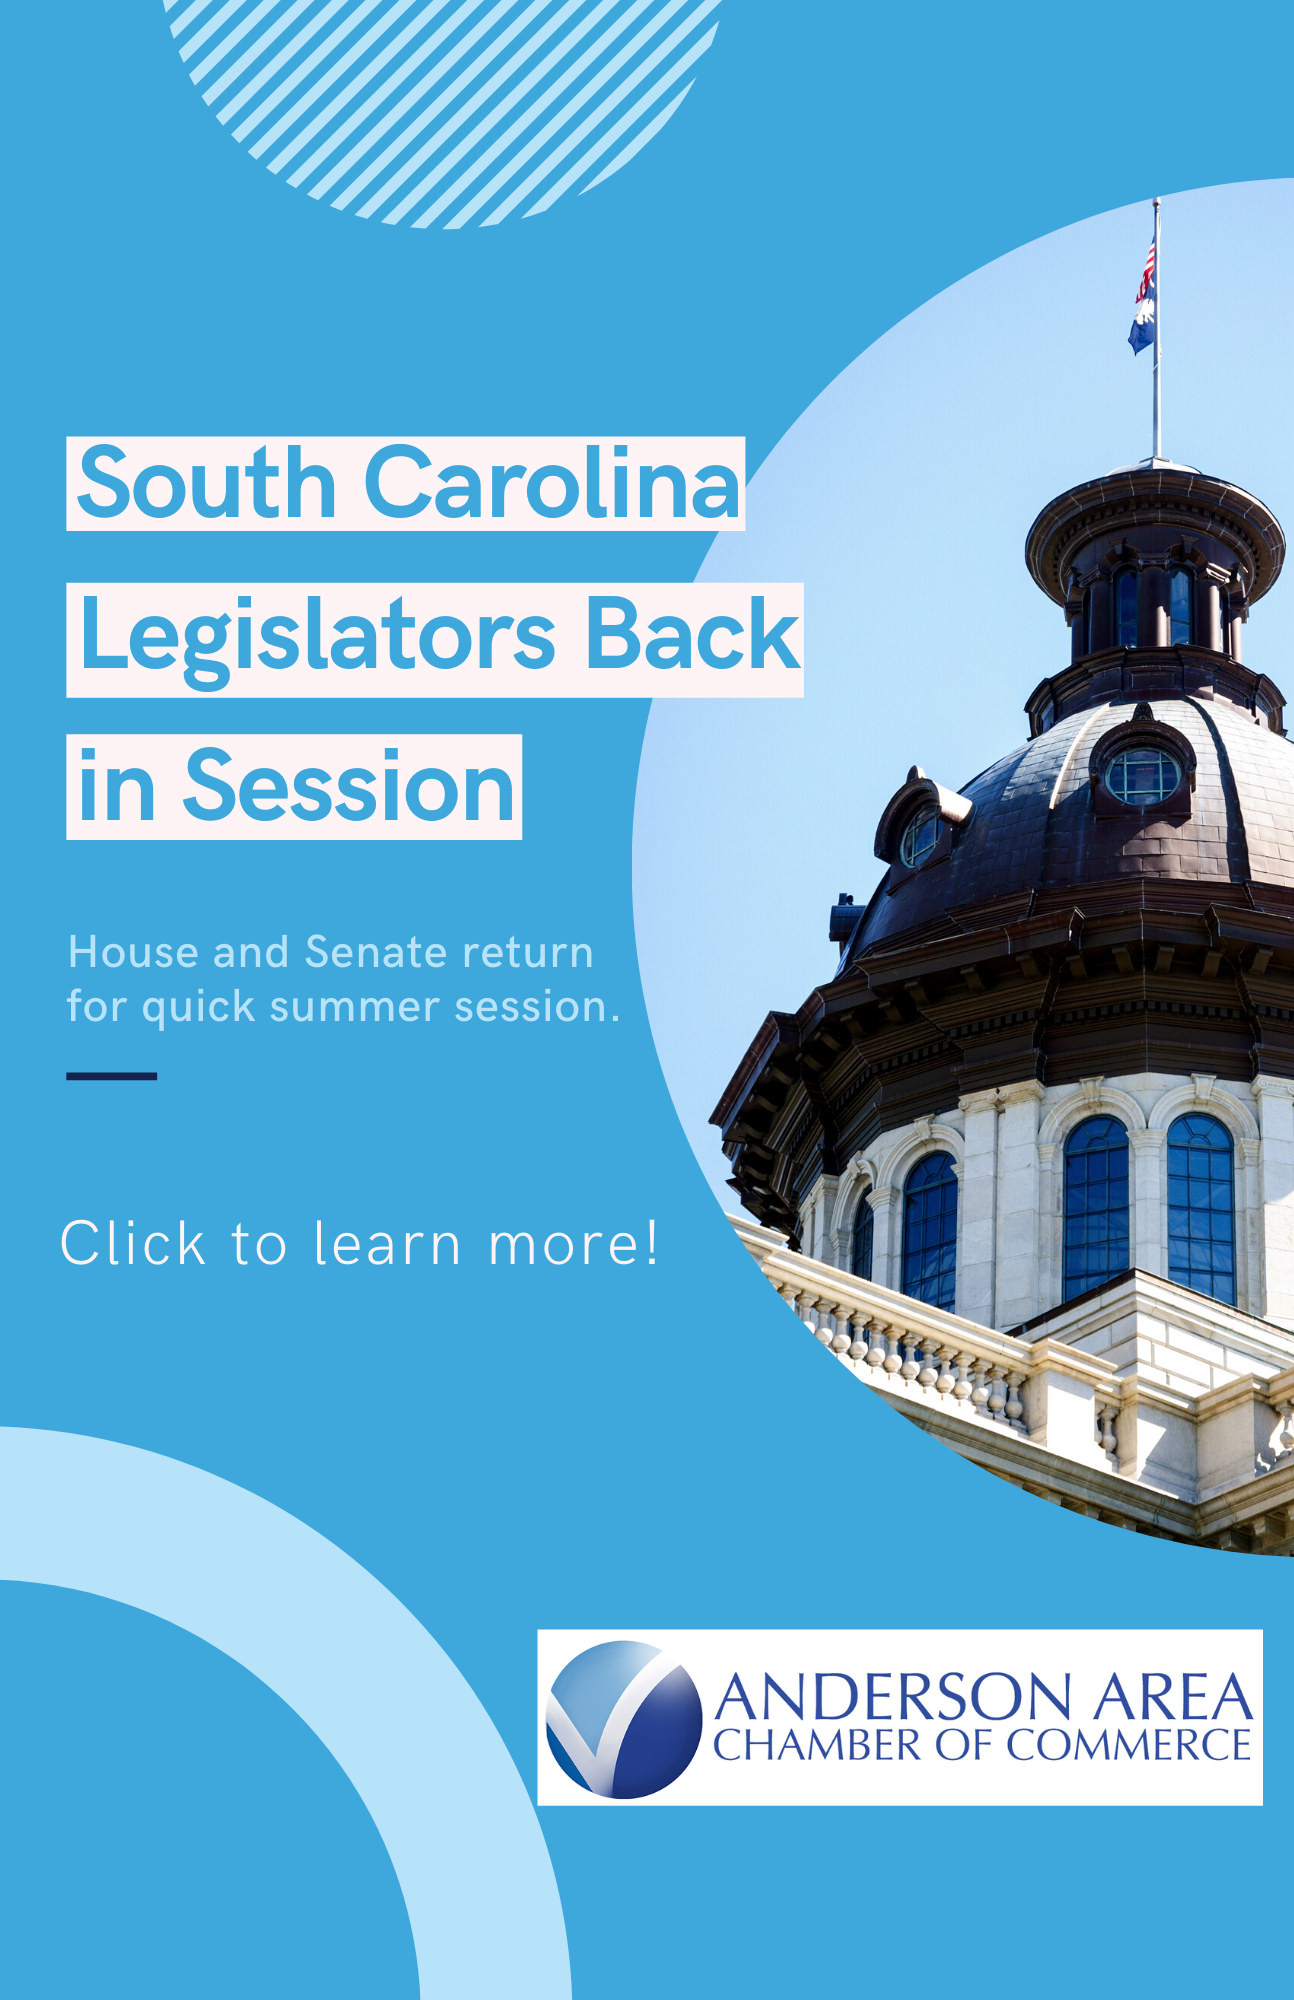 South Carolina legislators return to state house for abridged summer session